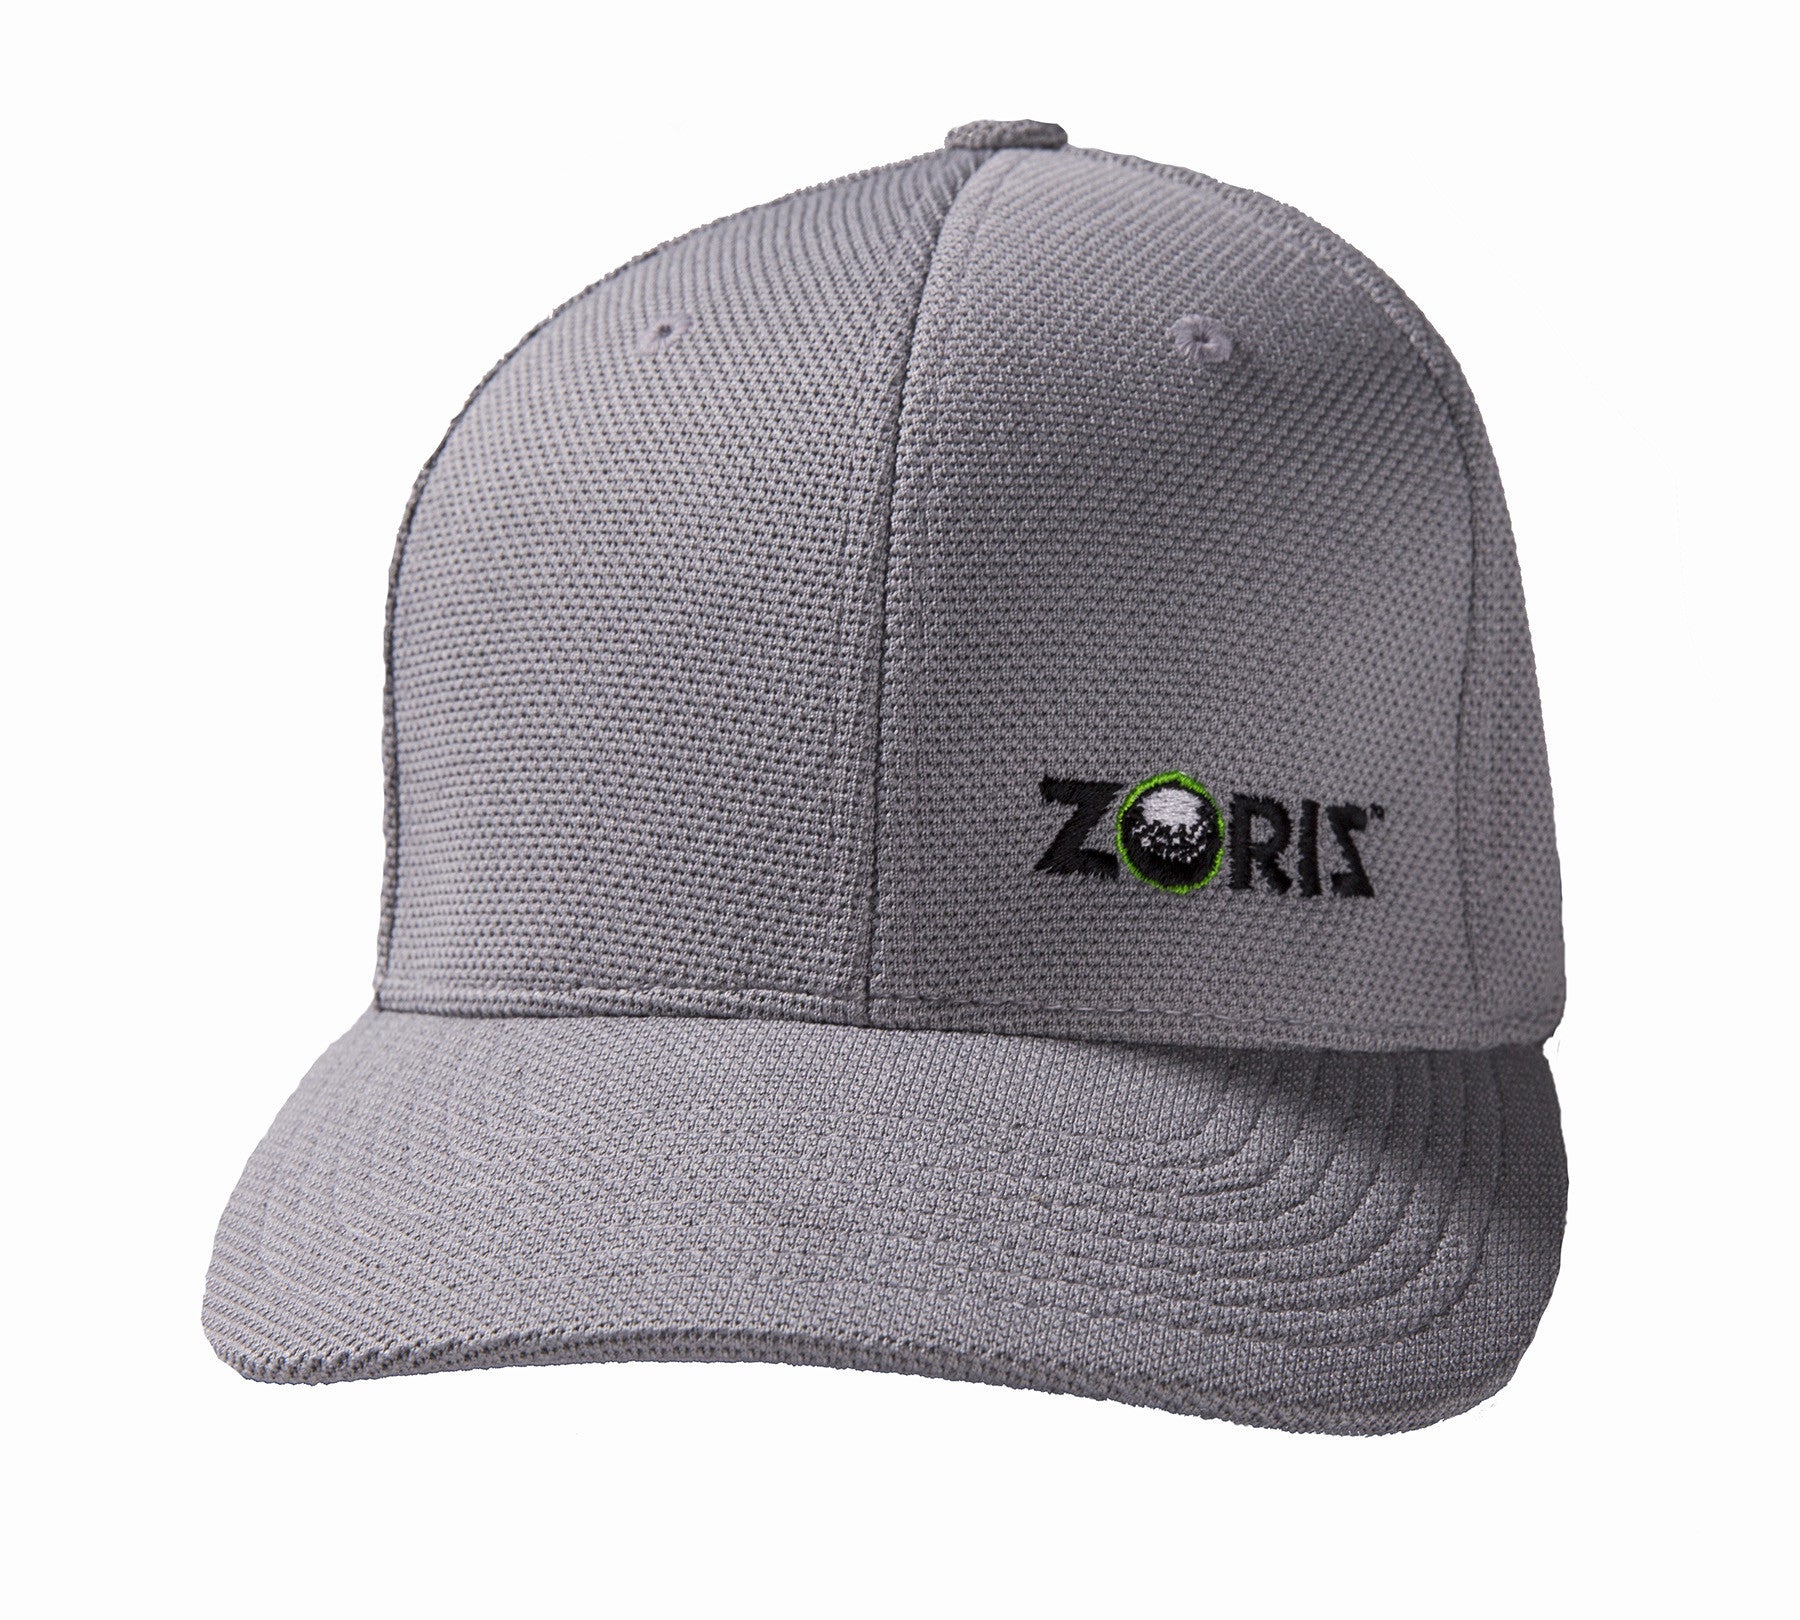 FLEXFIT ZORIZ Cali Logo Cool & Dry Pique Mesh Lid | Zoriz Golf Sandals